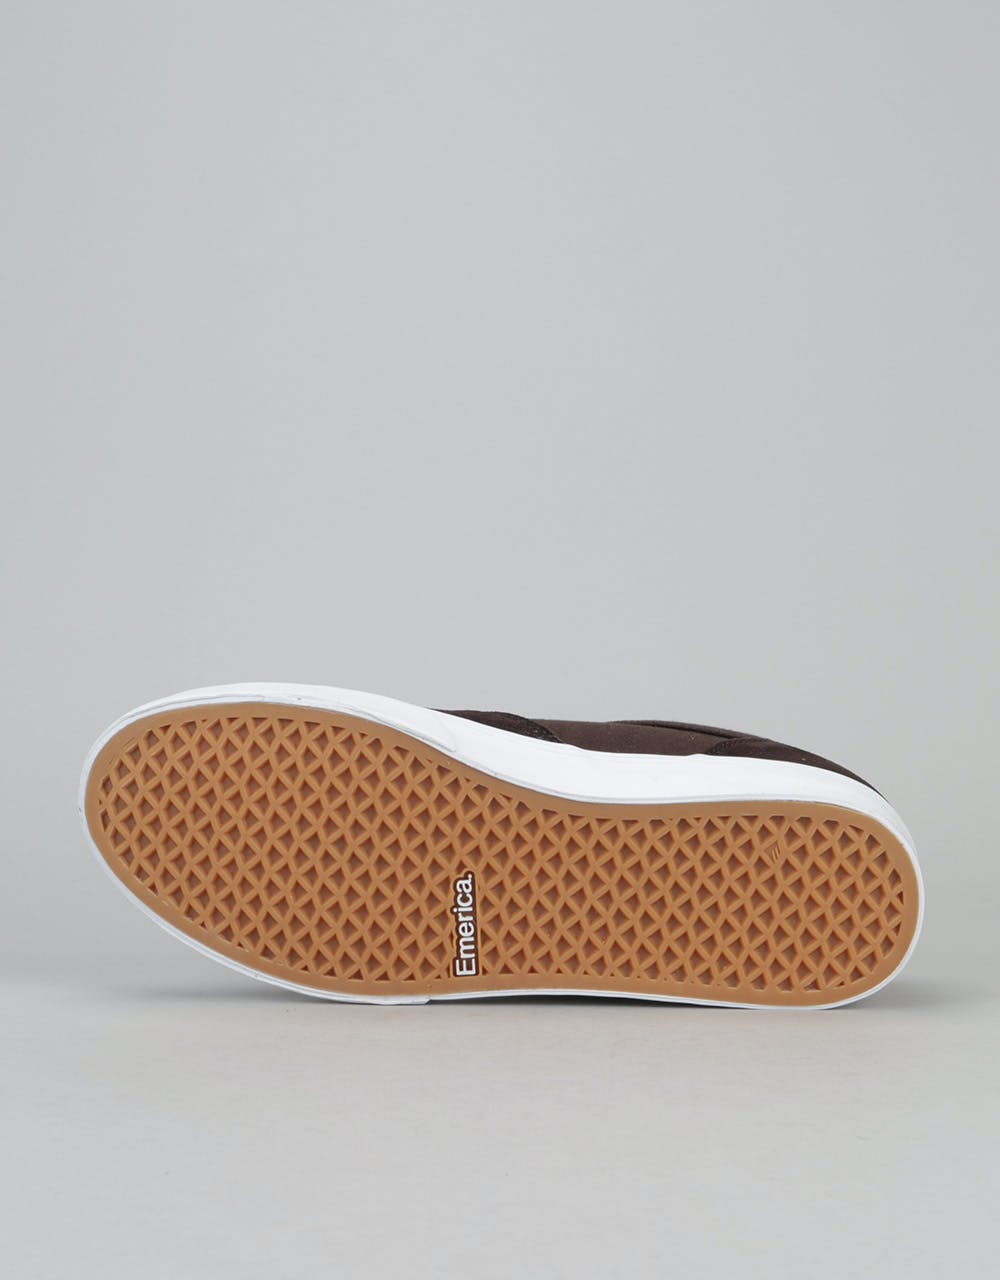 Emerica The Herman G6 Vulc Skate Shoes - Brown/White